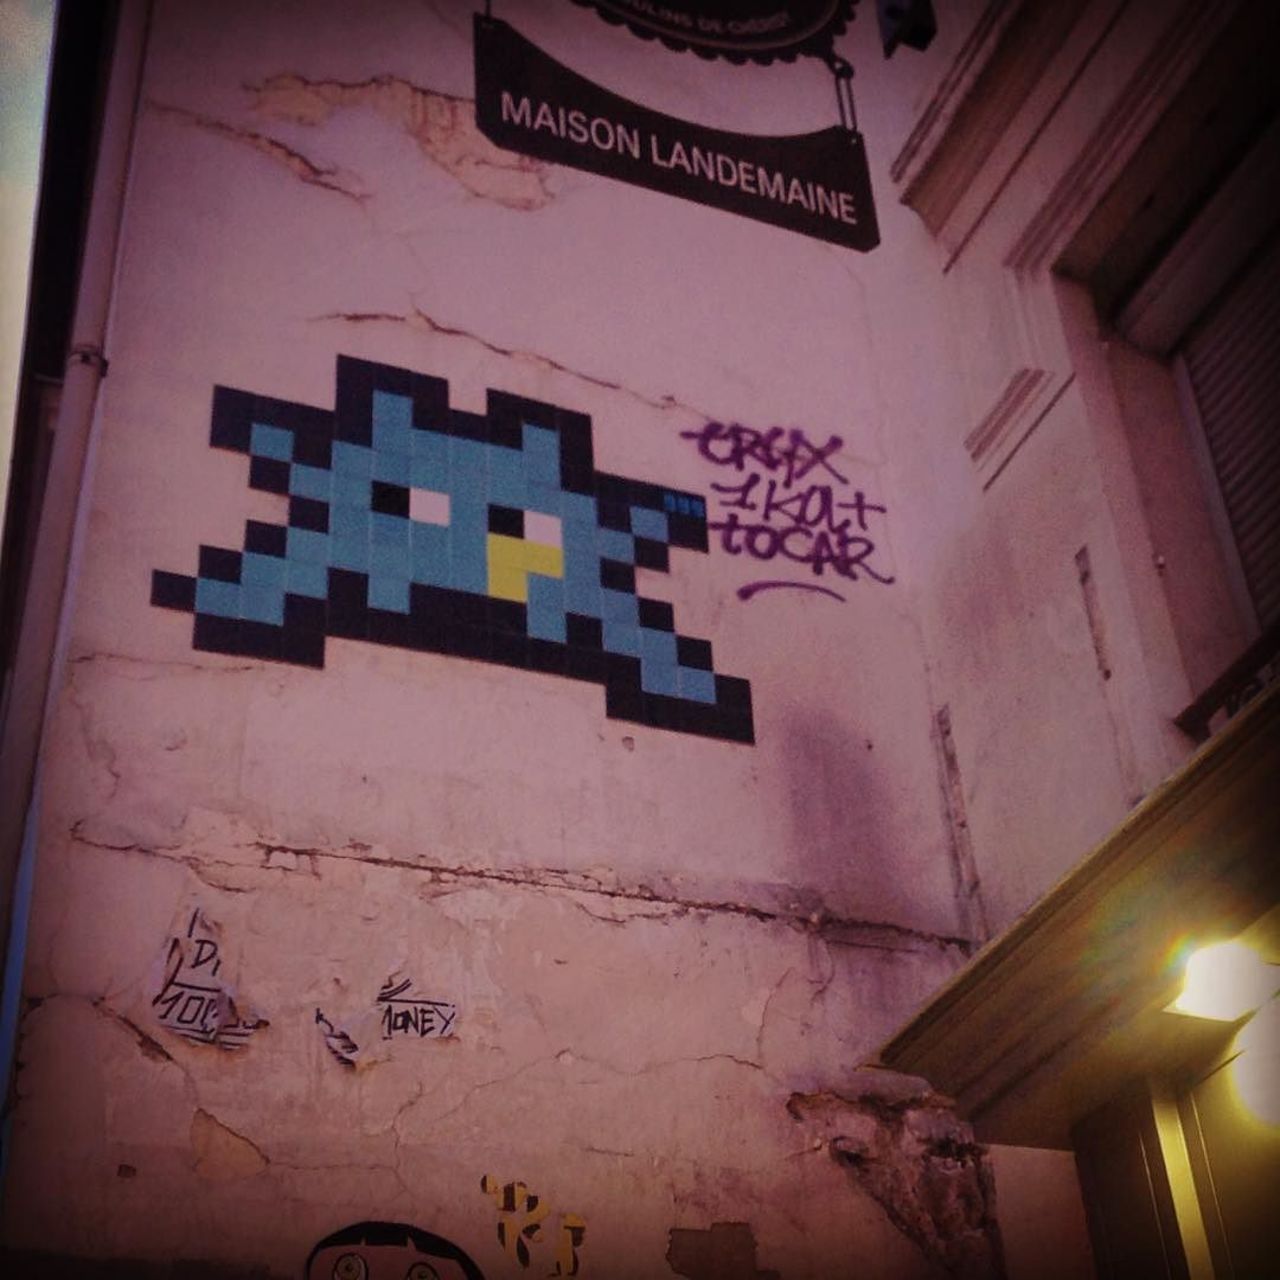 #Paris #graffiti photo by @stefetlinda http://ift.tt/1LSs4Le #StreetArt https://t.co/vwF8UZFiLt